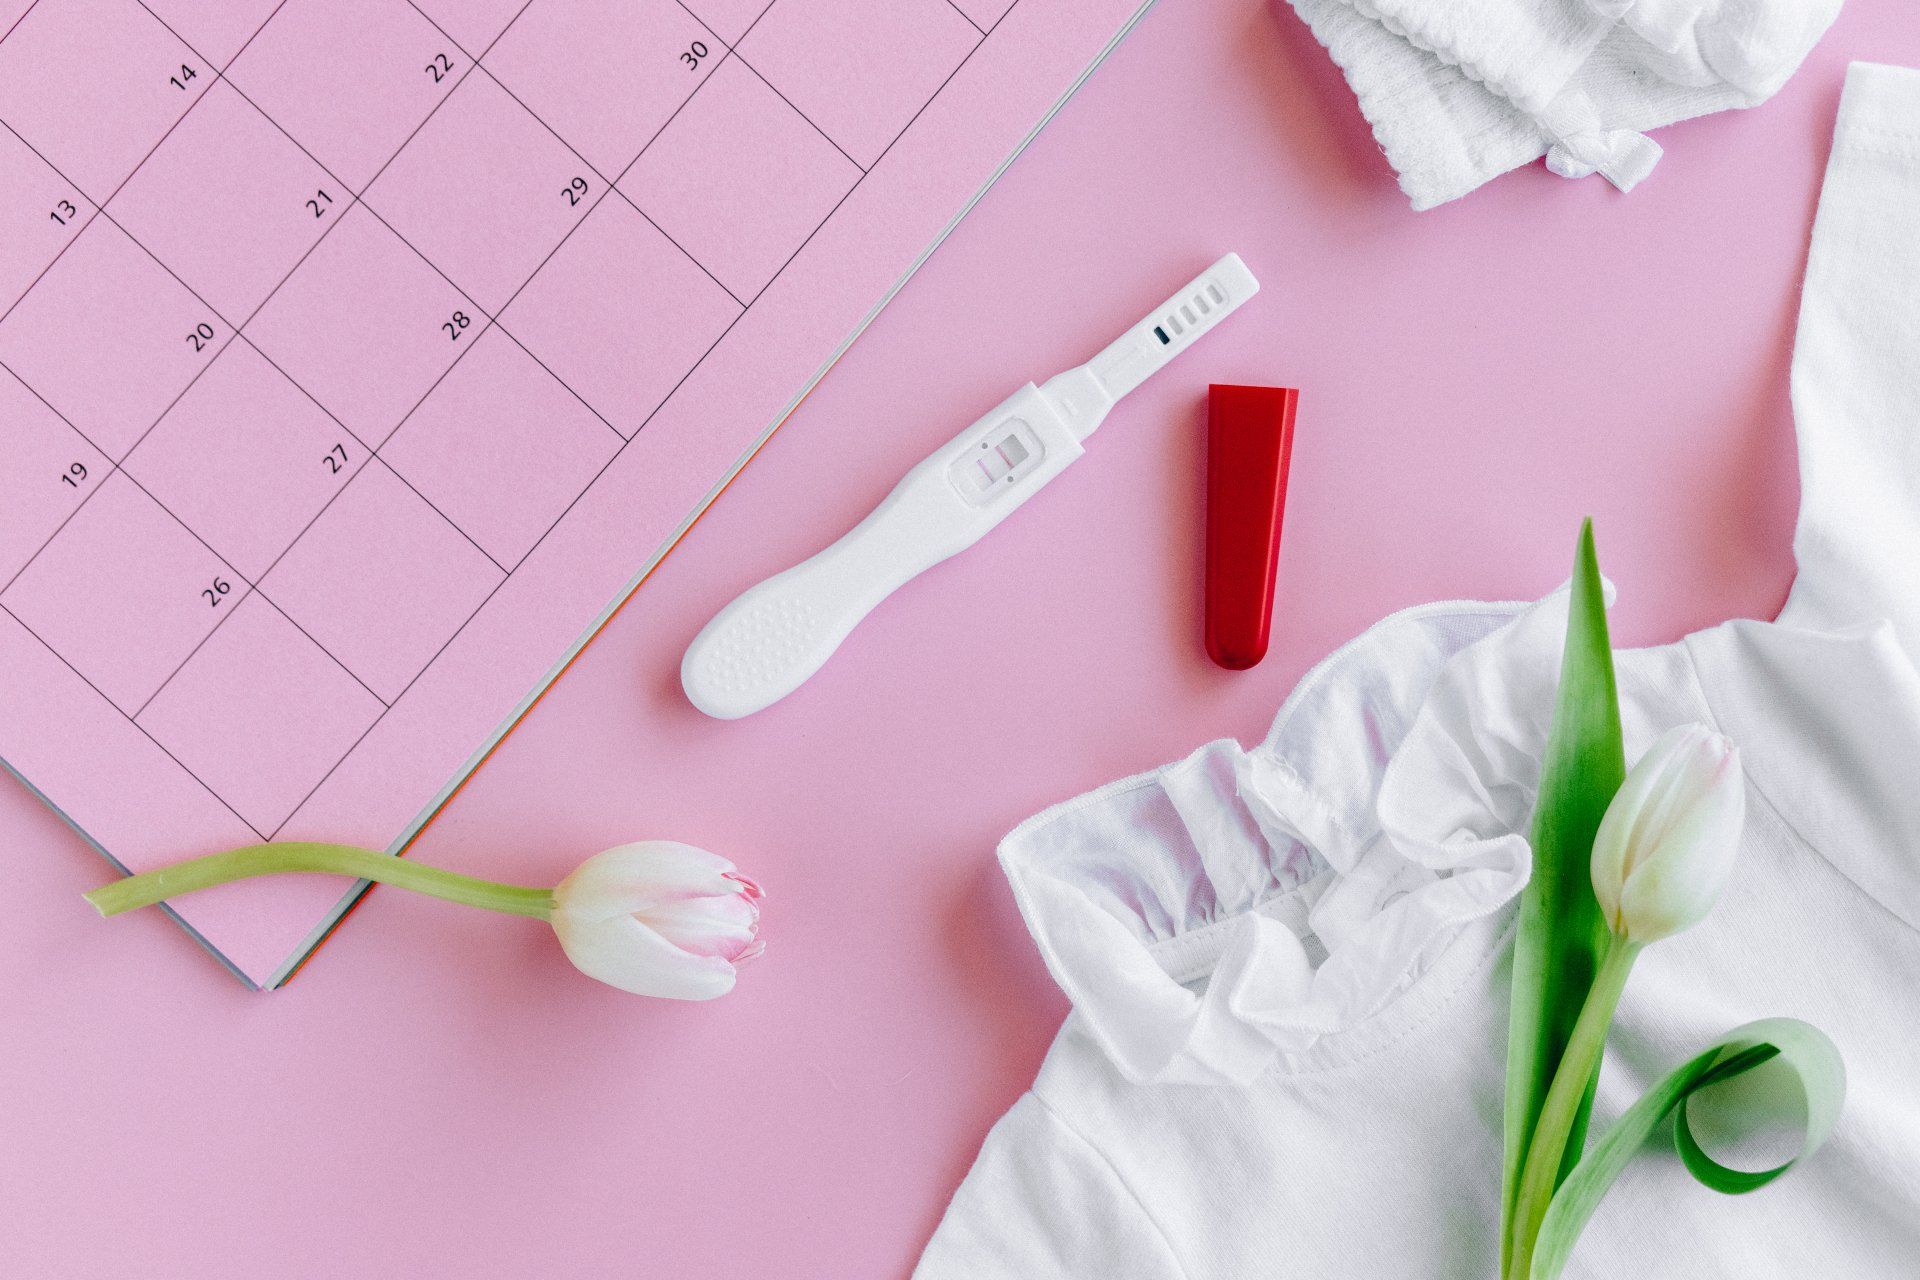 pregnancy test next to a calendar with a white shirt